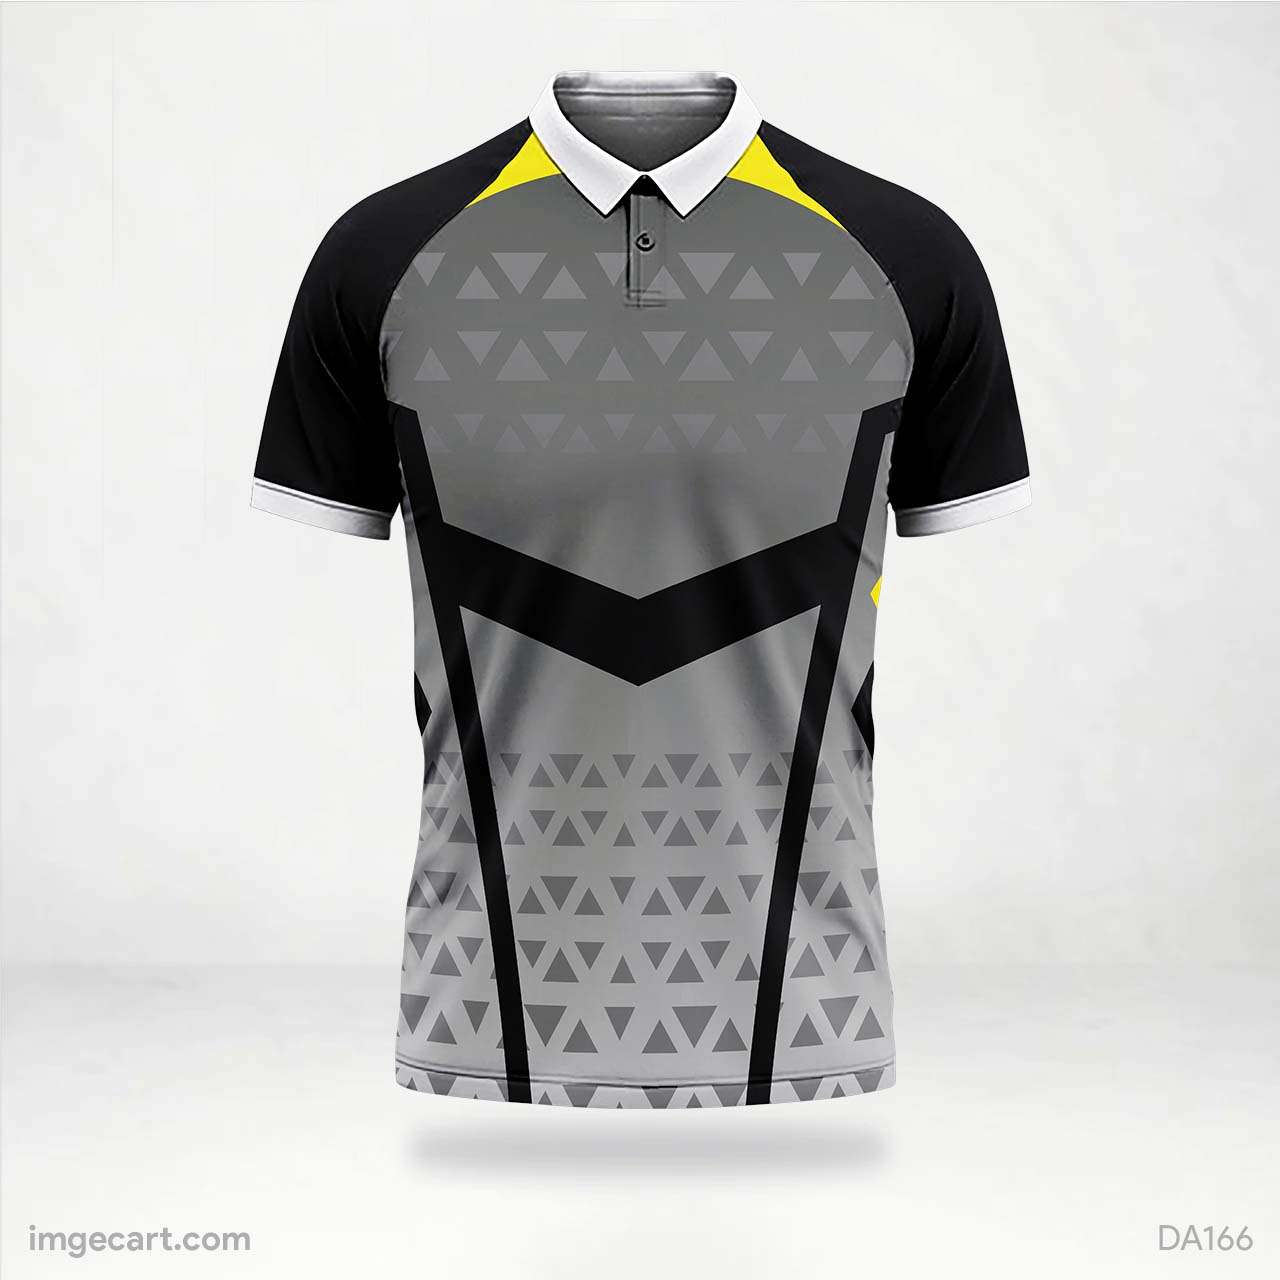 Cricket Jersey Design Black and Grey Effect - imgecart